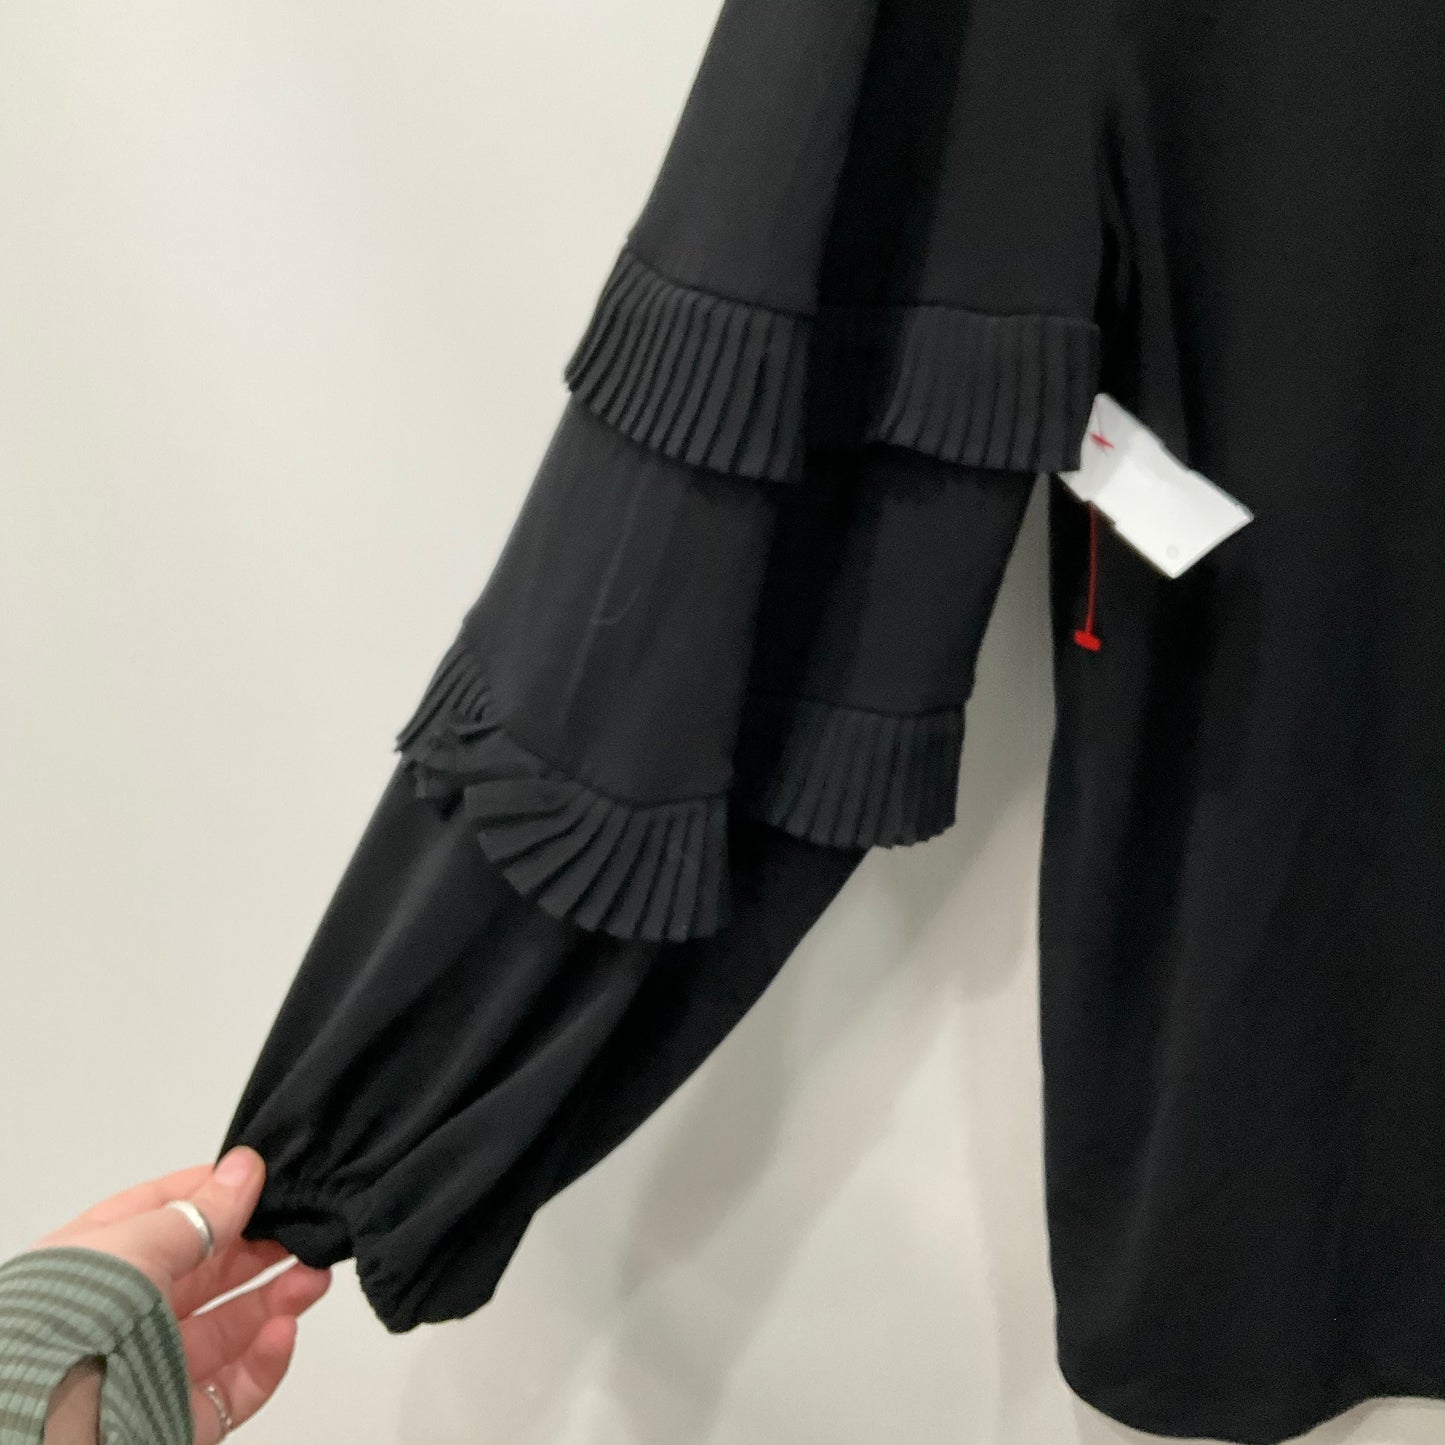 Top Long Sleeve By Alfani  Size: Xl